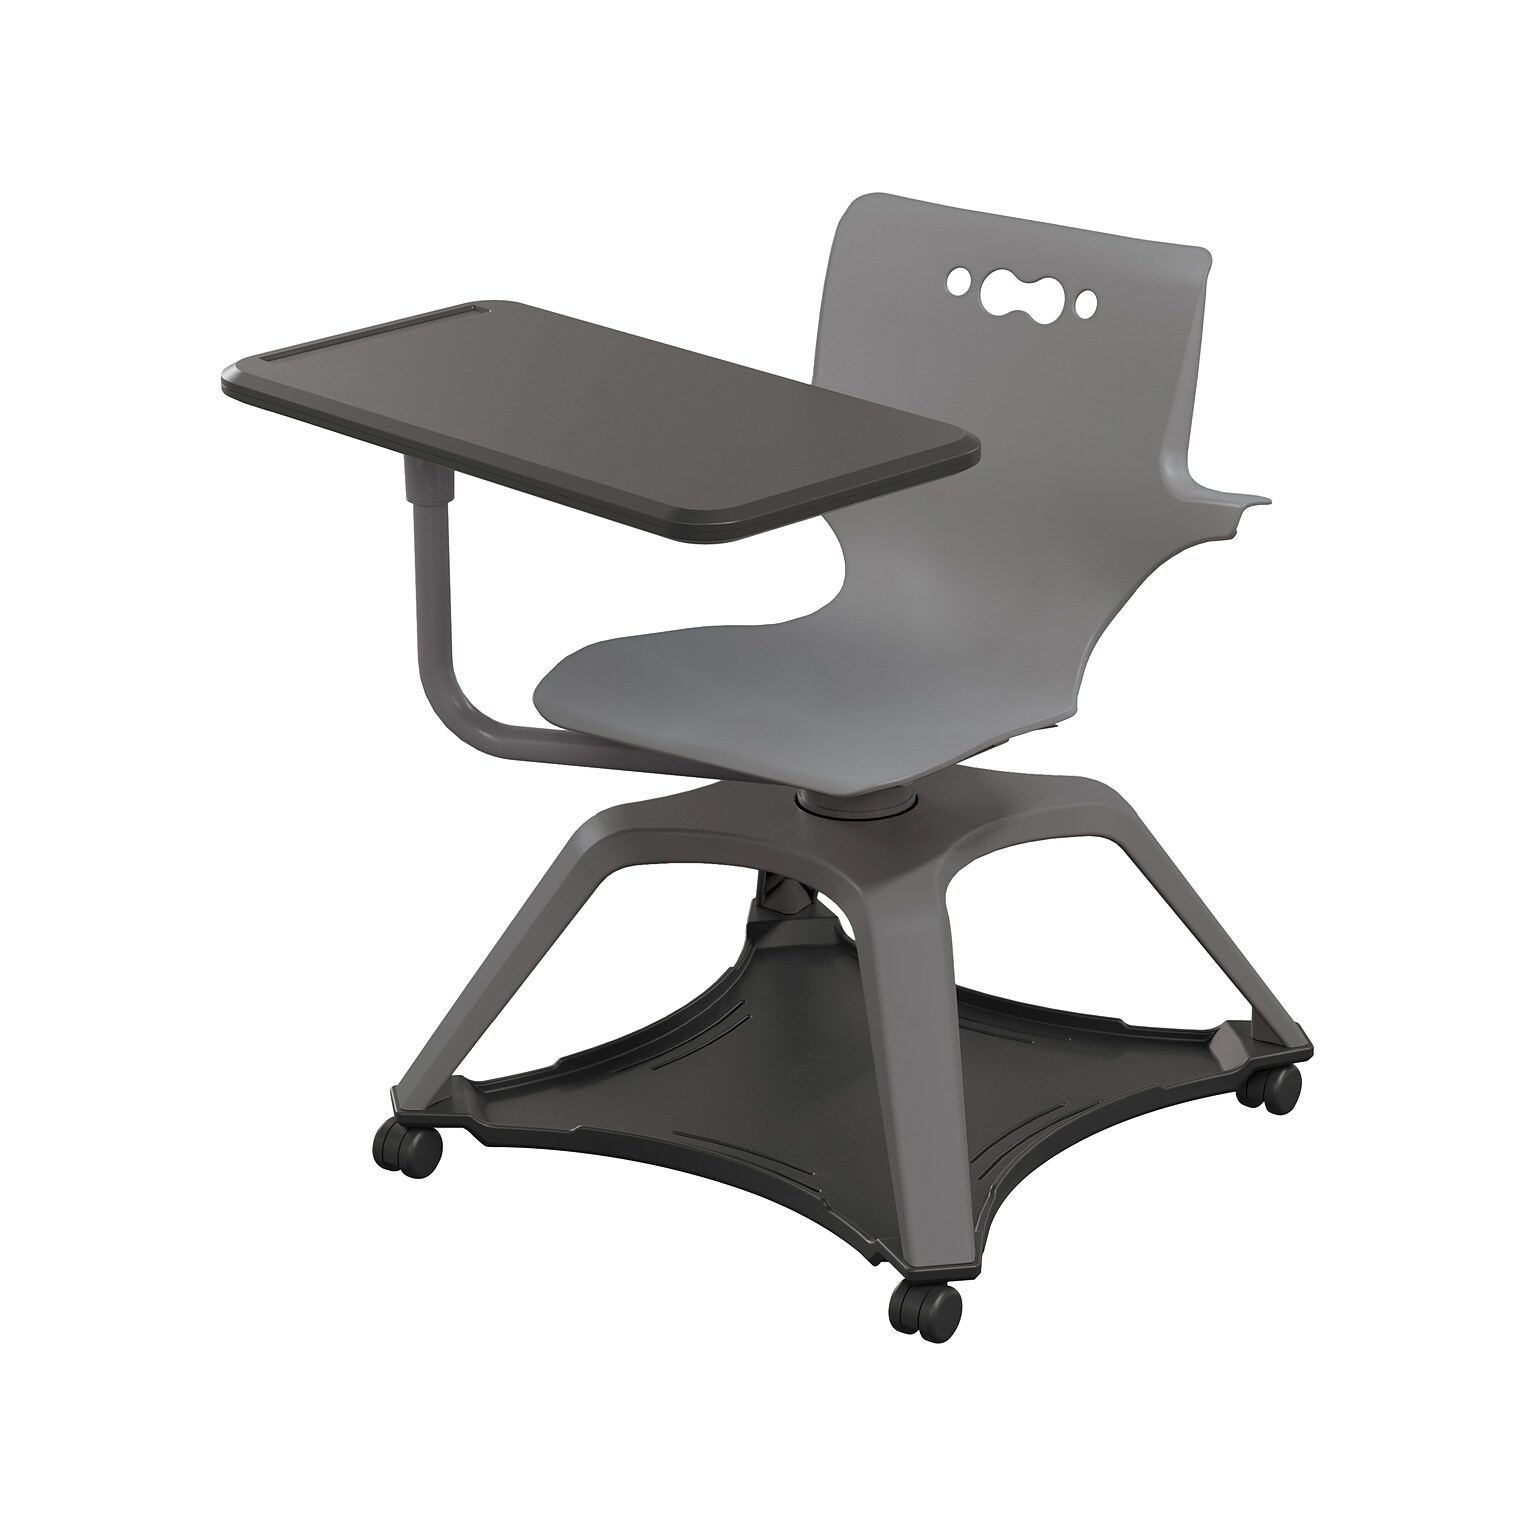 MooreCo Hierarchy Enroll Polypropylene School Chair, Cool Gray (54325-Gray-WA-TN-SC)